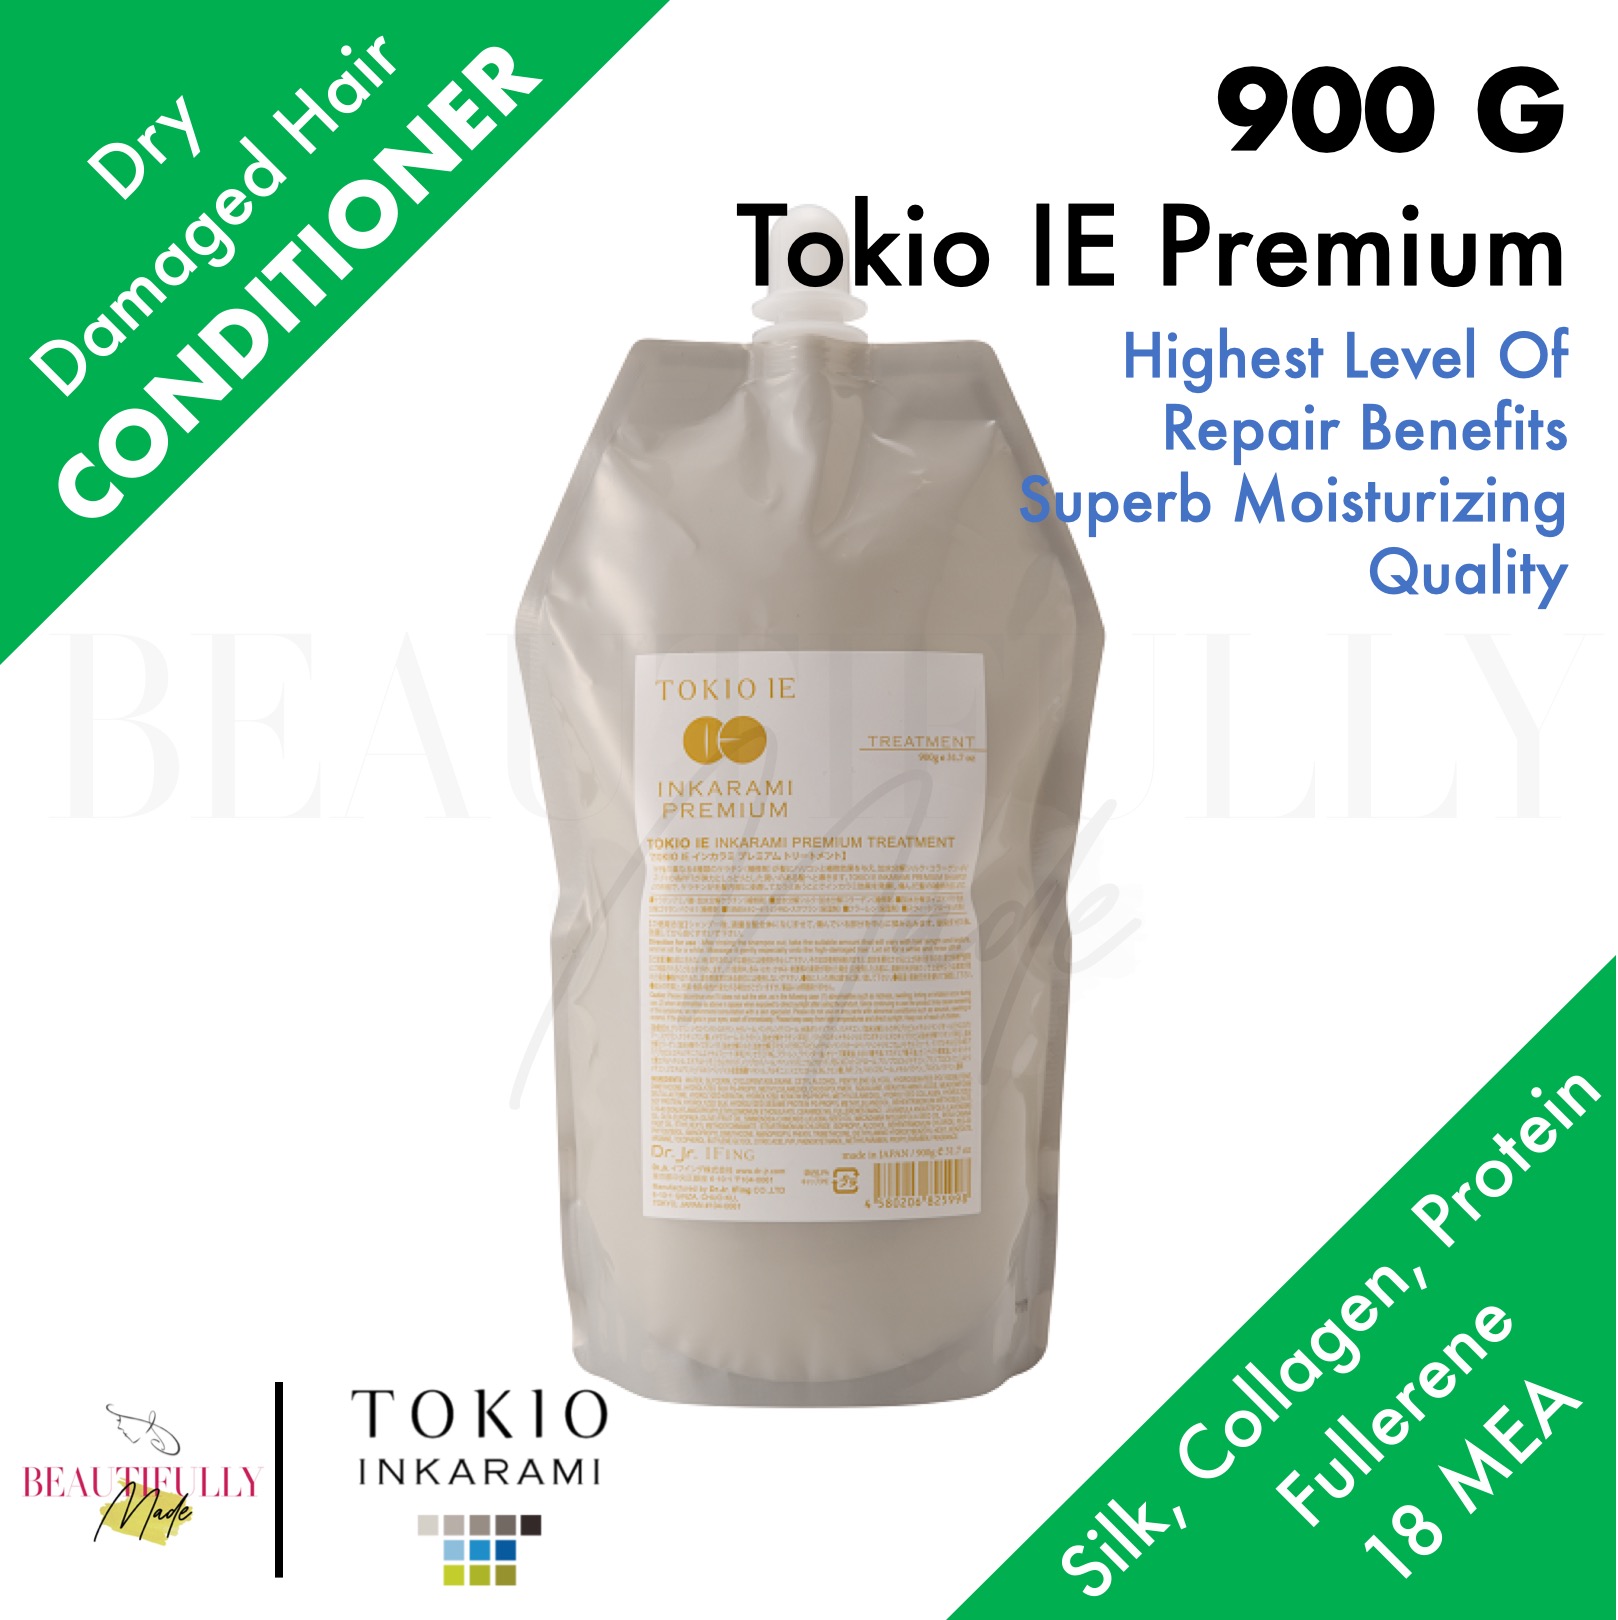 Tokio IE Inkarami Premium Treatment 700g / 900g Refill - For Dry